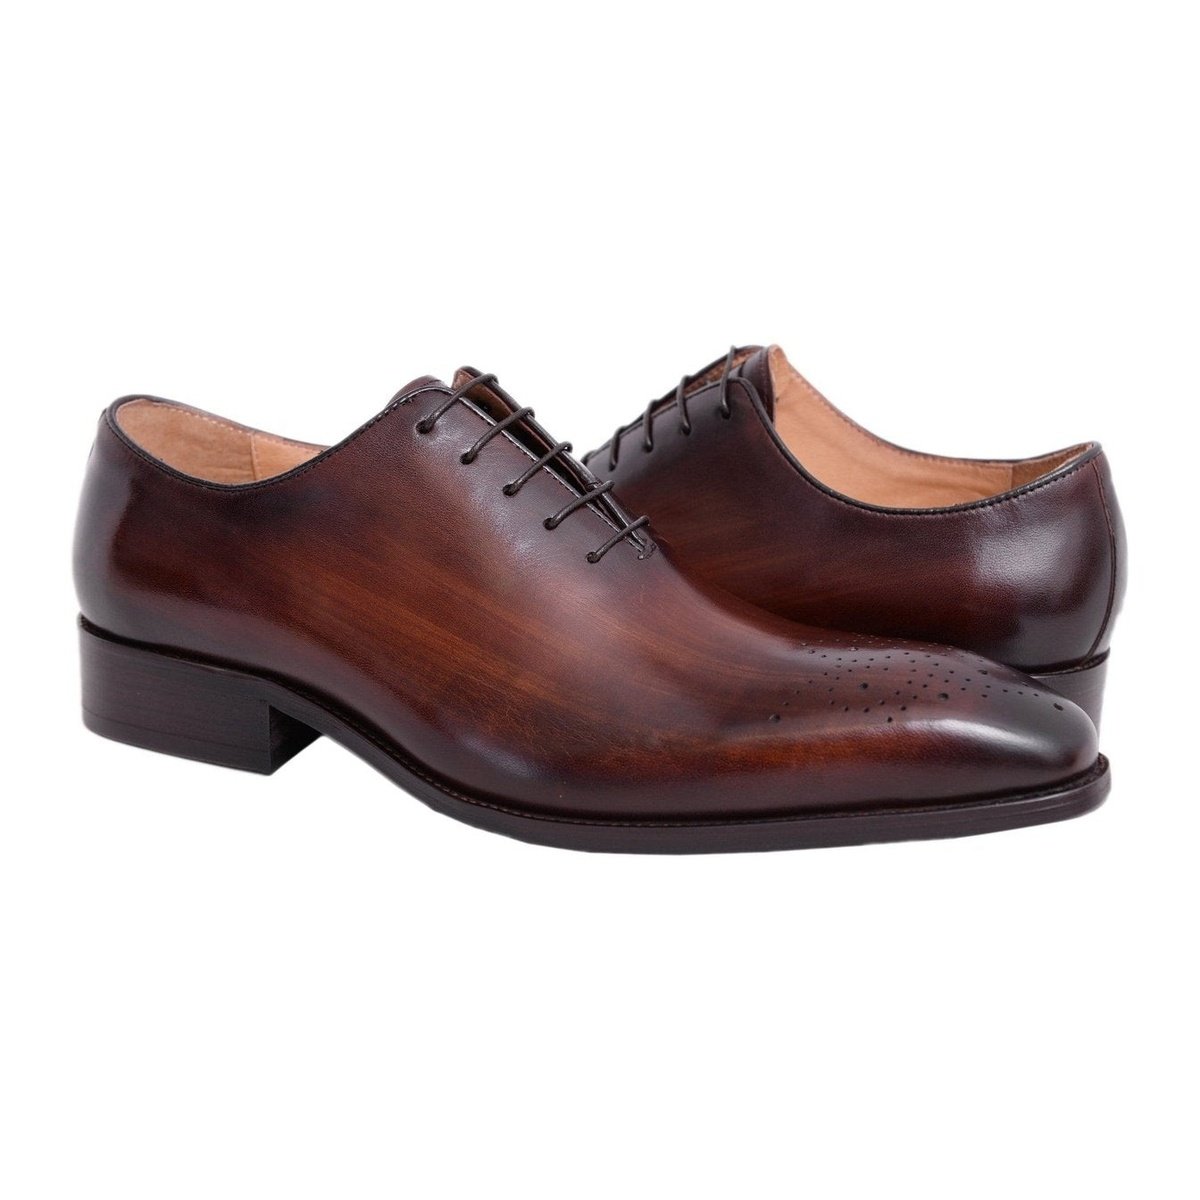 Carrucci Shoes For Amazon 8.5 D-M Carrucci Mens Brown Chestnut Whole Cut Oxford Leather Dress Shoes